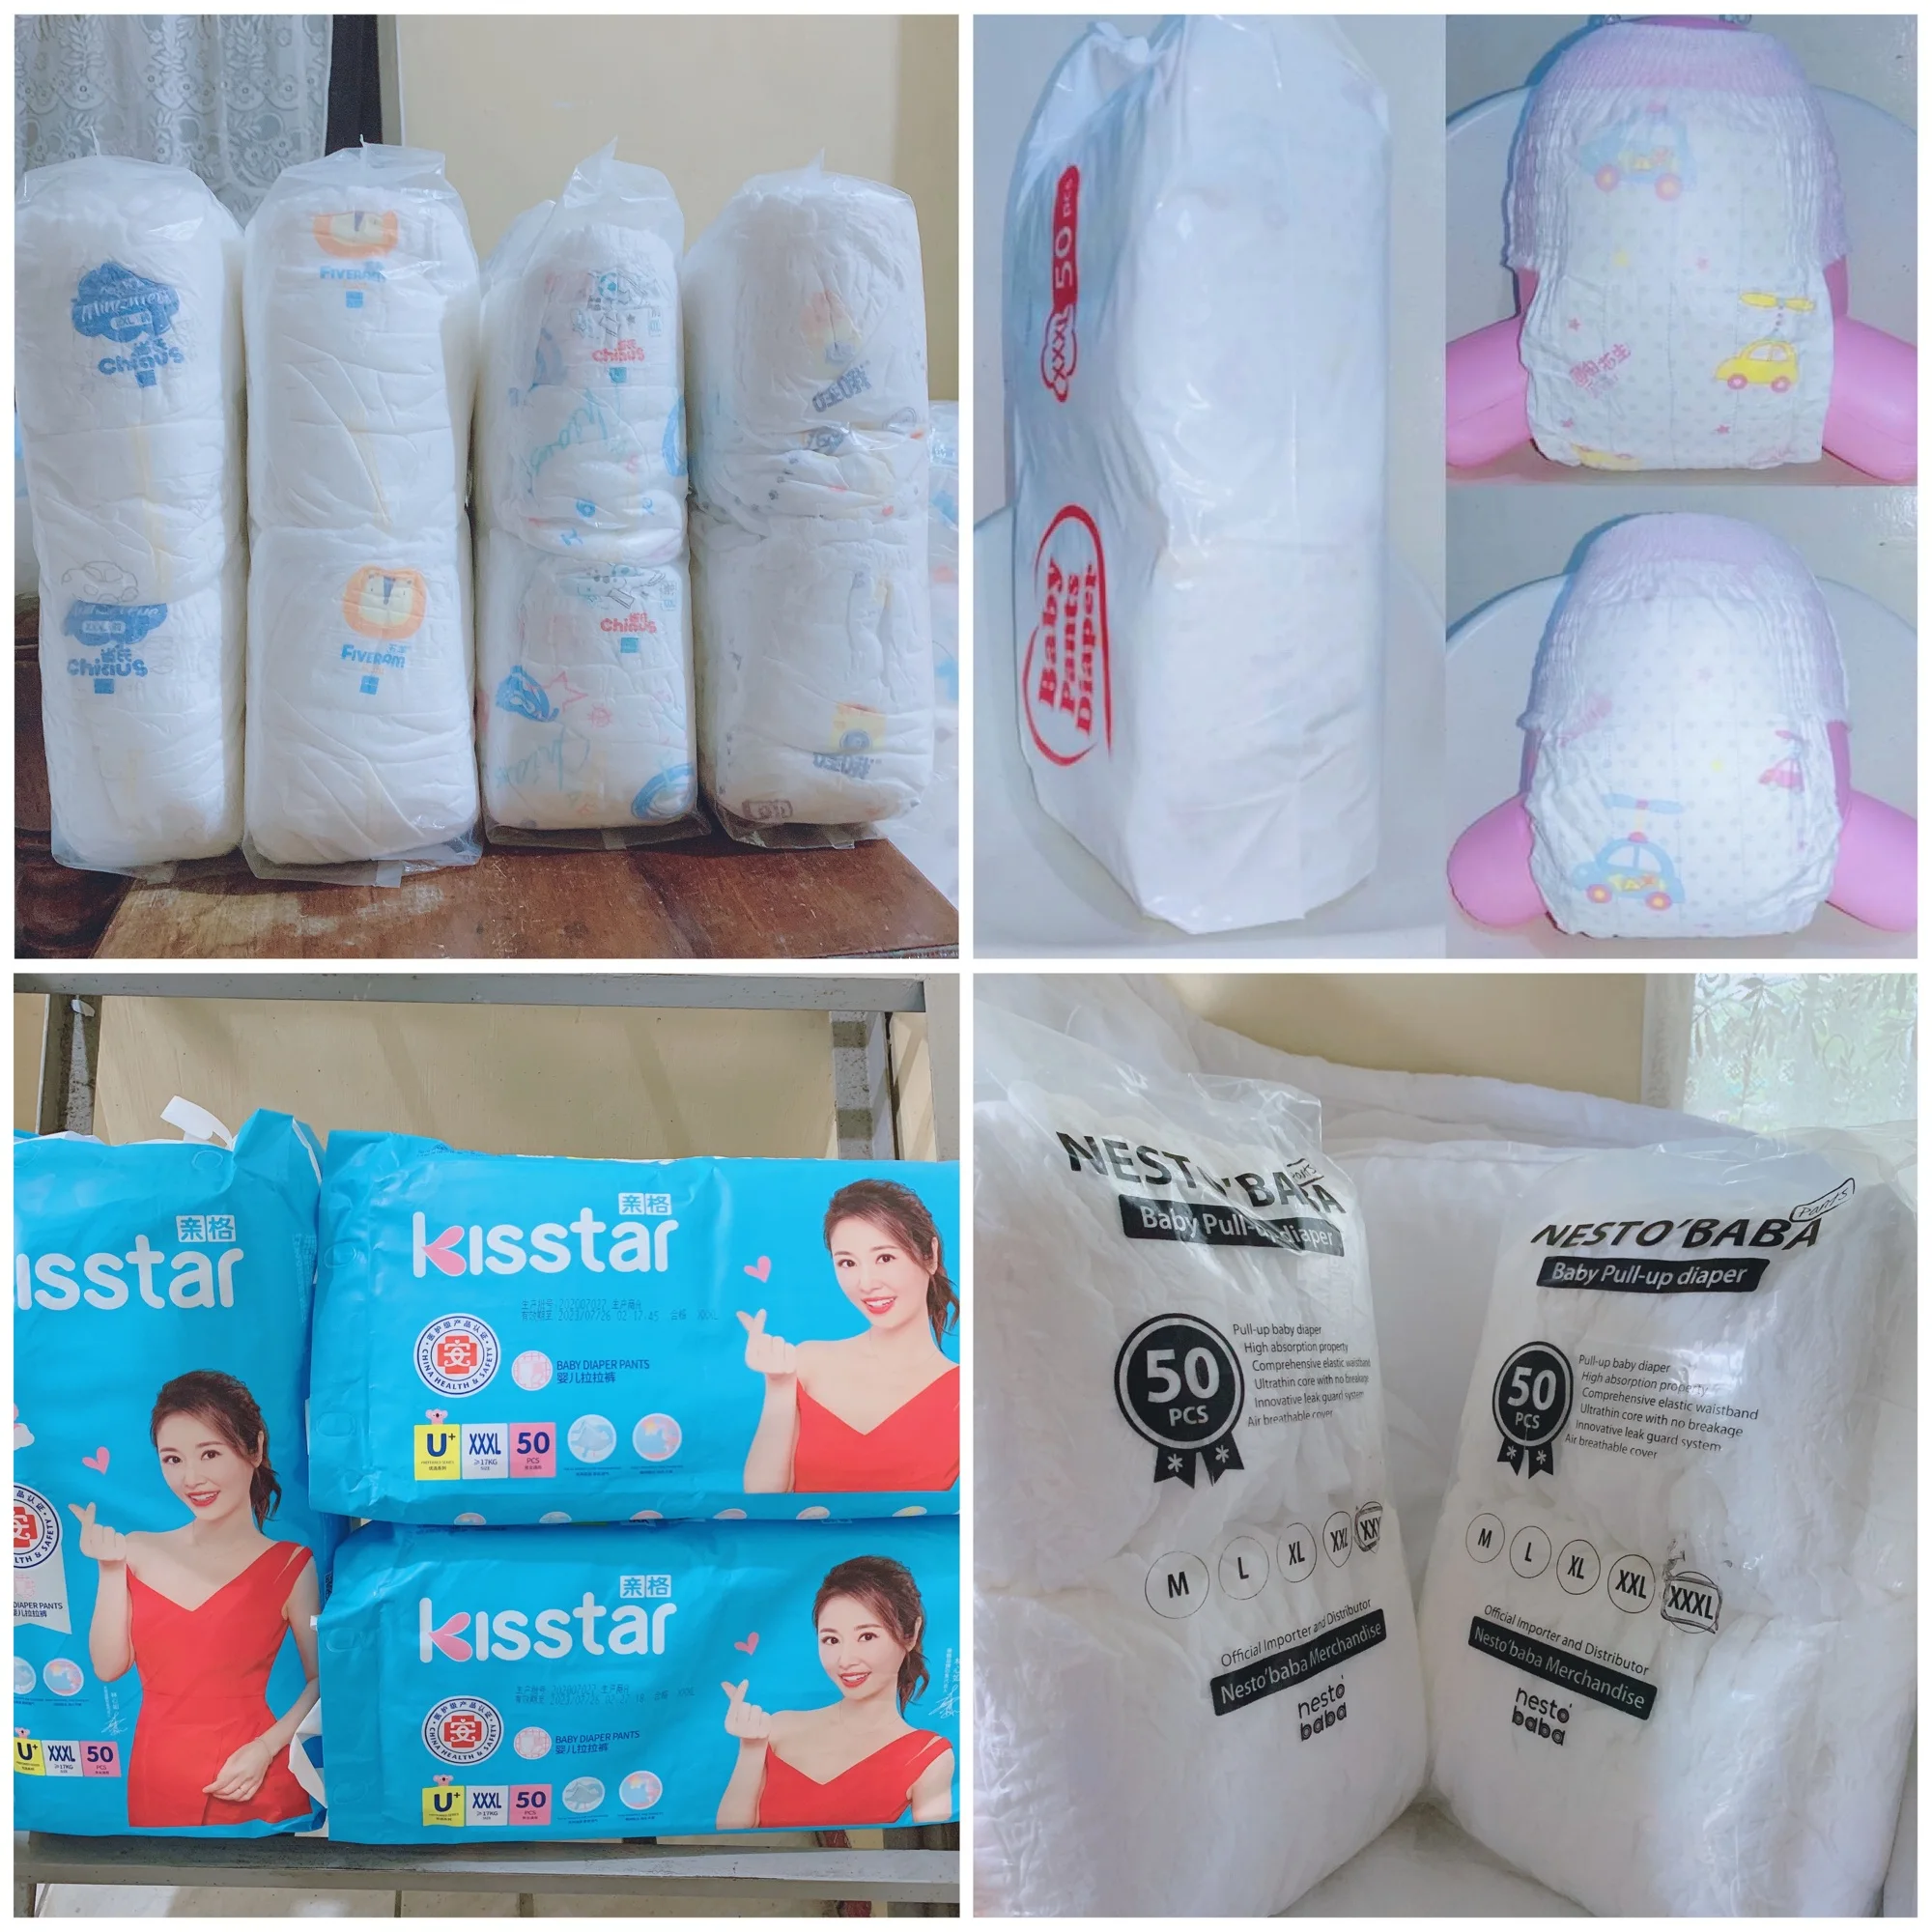 3XL XXXL 50 pcs PANTS Korean Diaper Size KISSTAR NESTO’BABA ALLOVES IMPORTED PREMIUM BABY DIAPER Ultra thin